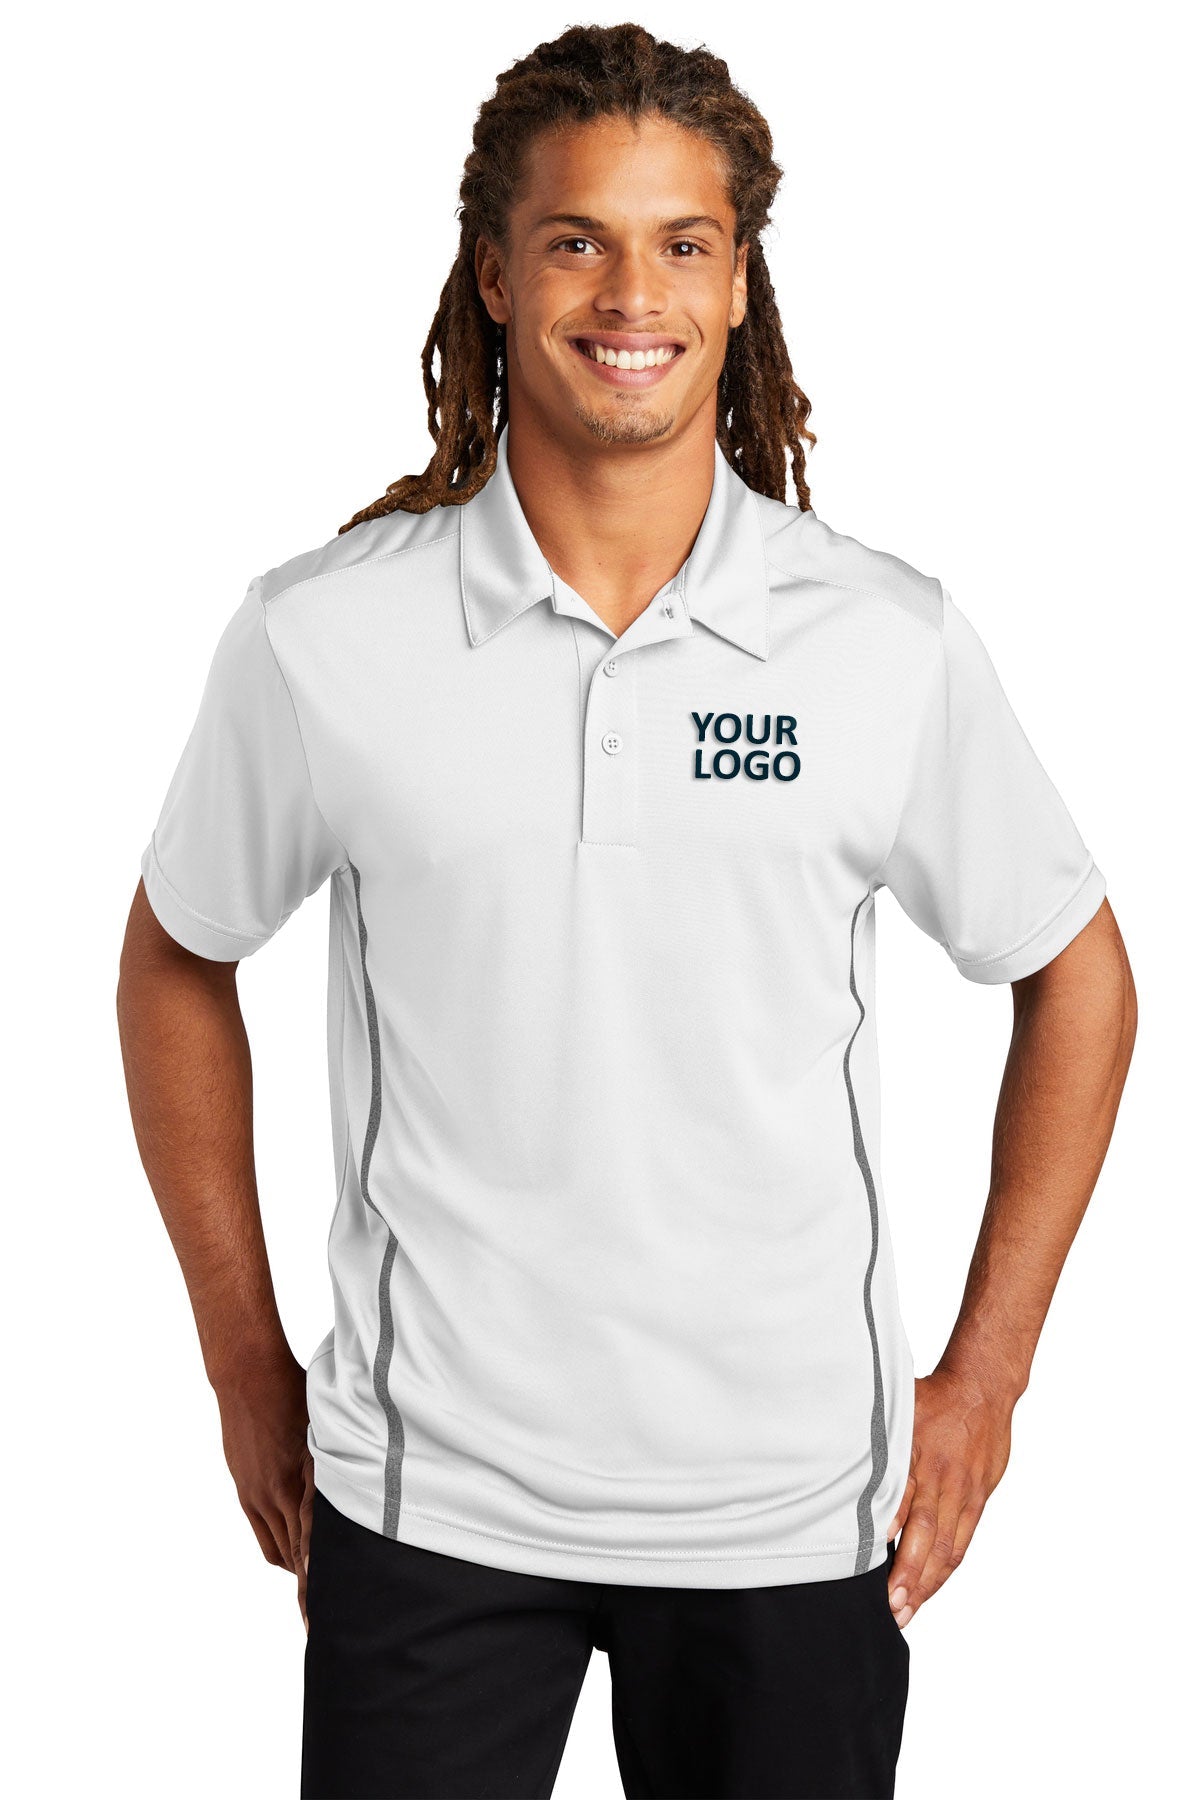 Sport-Tek White/ Heather Grey ST620 custom polo shirts dri fit